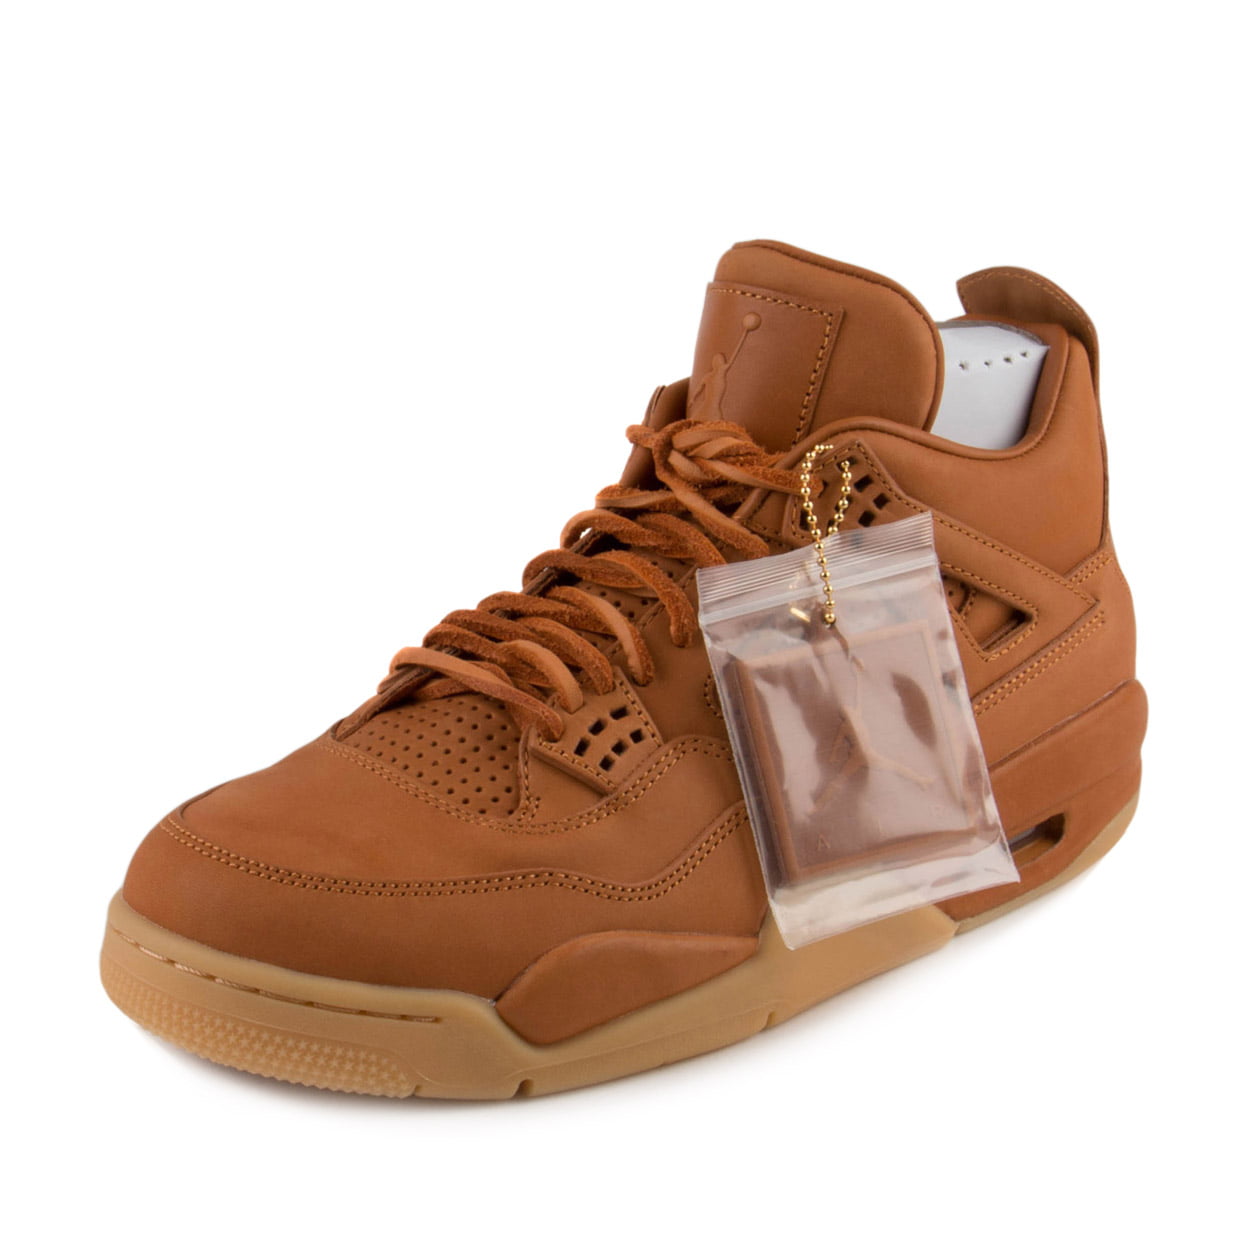 Nike Air Jordan 4 Retro Premium Wheat Brown Shoes 819139-205 Men’s Size 8.5  GOOD